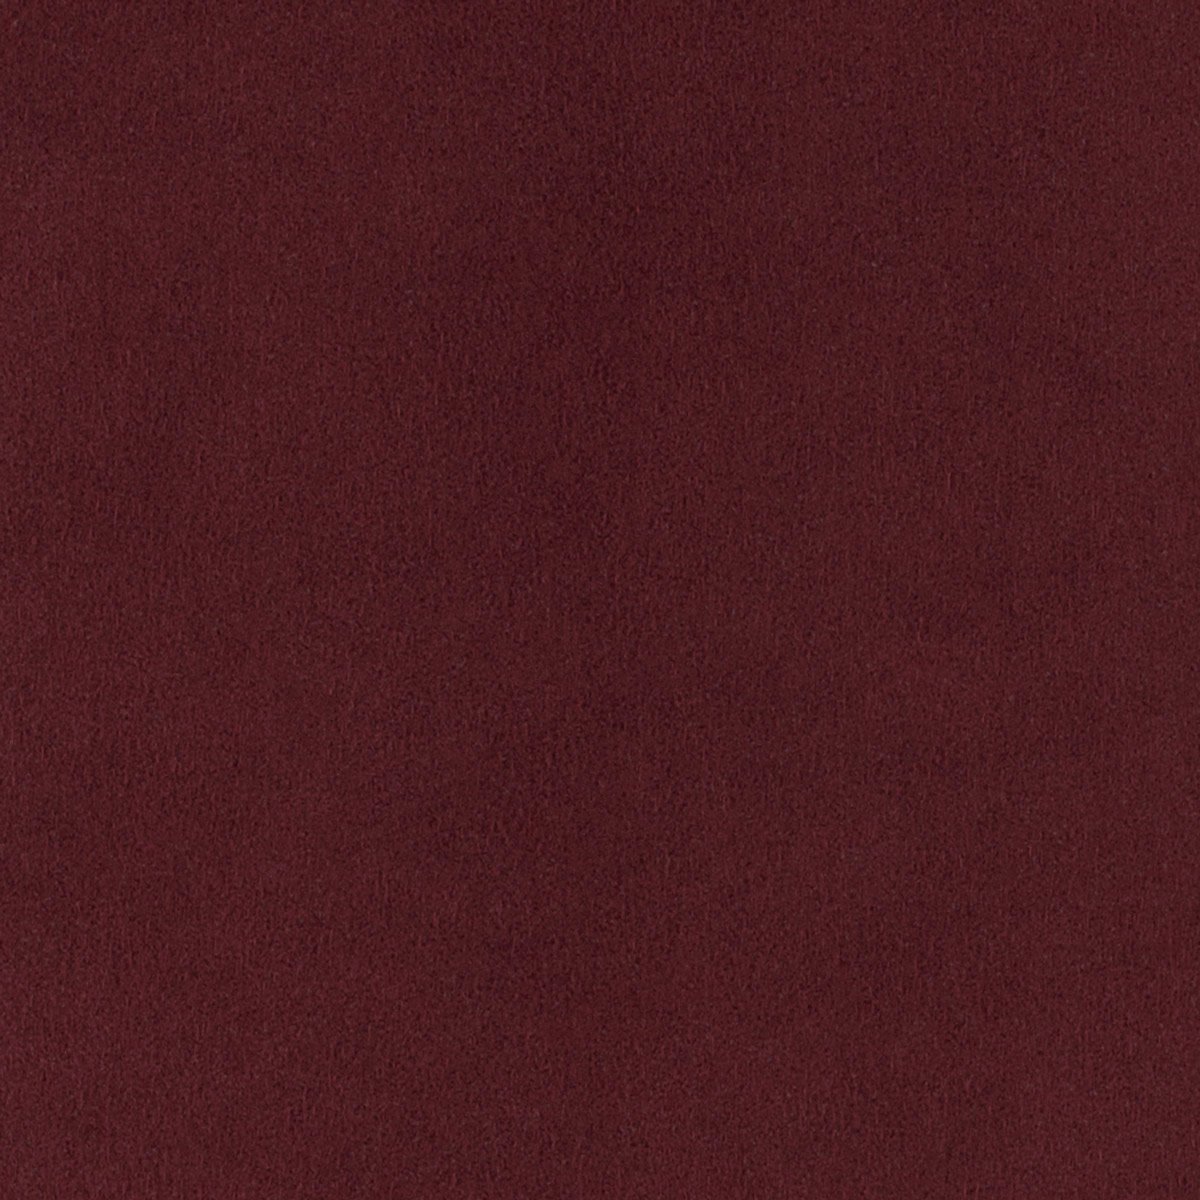 Toray Ultrasuede® ST 1468 Bordeaux Fabric